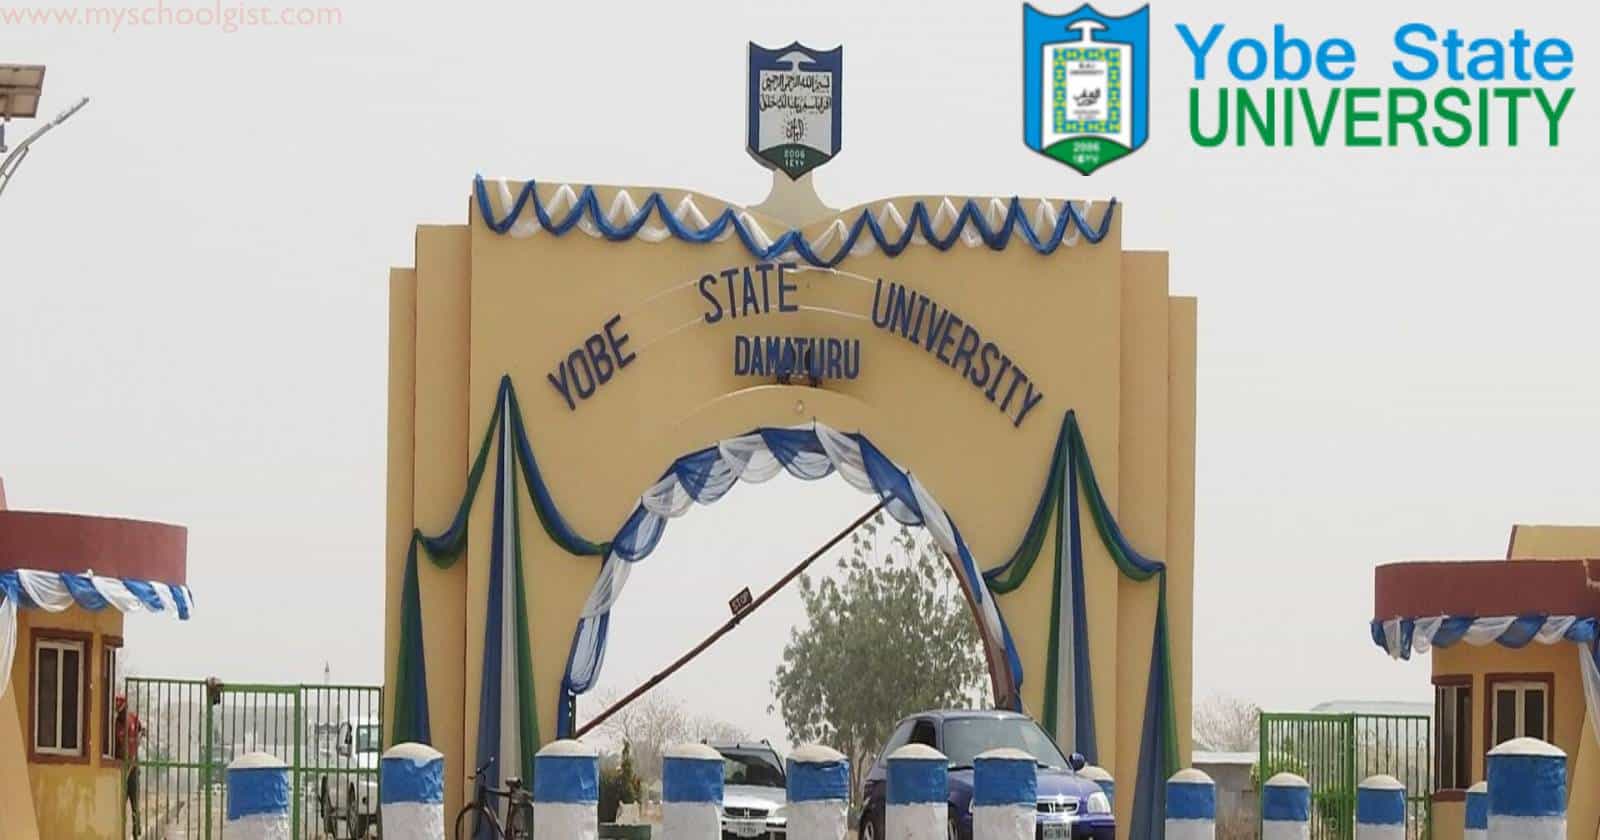 Yobe State University (YSU) Enrollment Policies